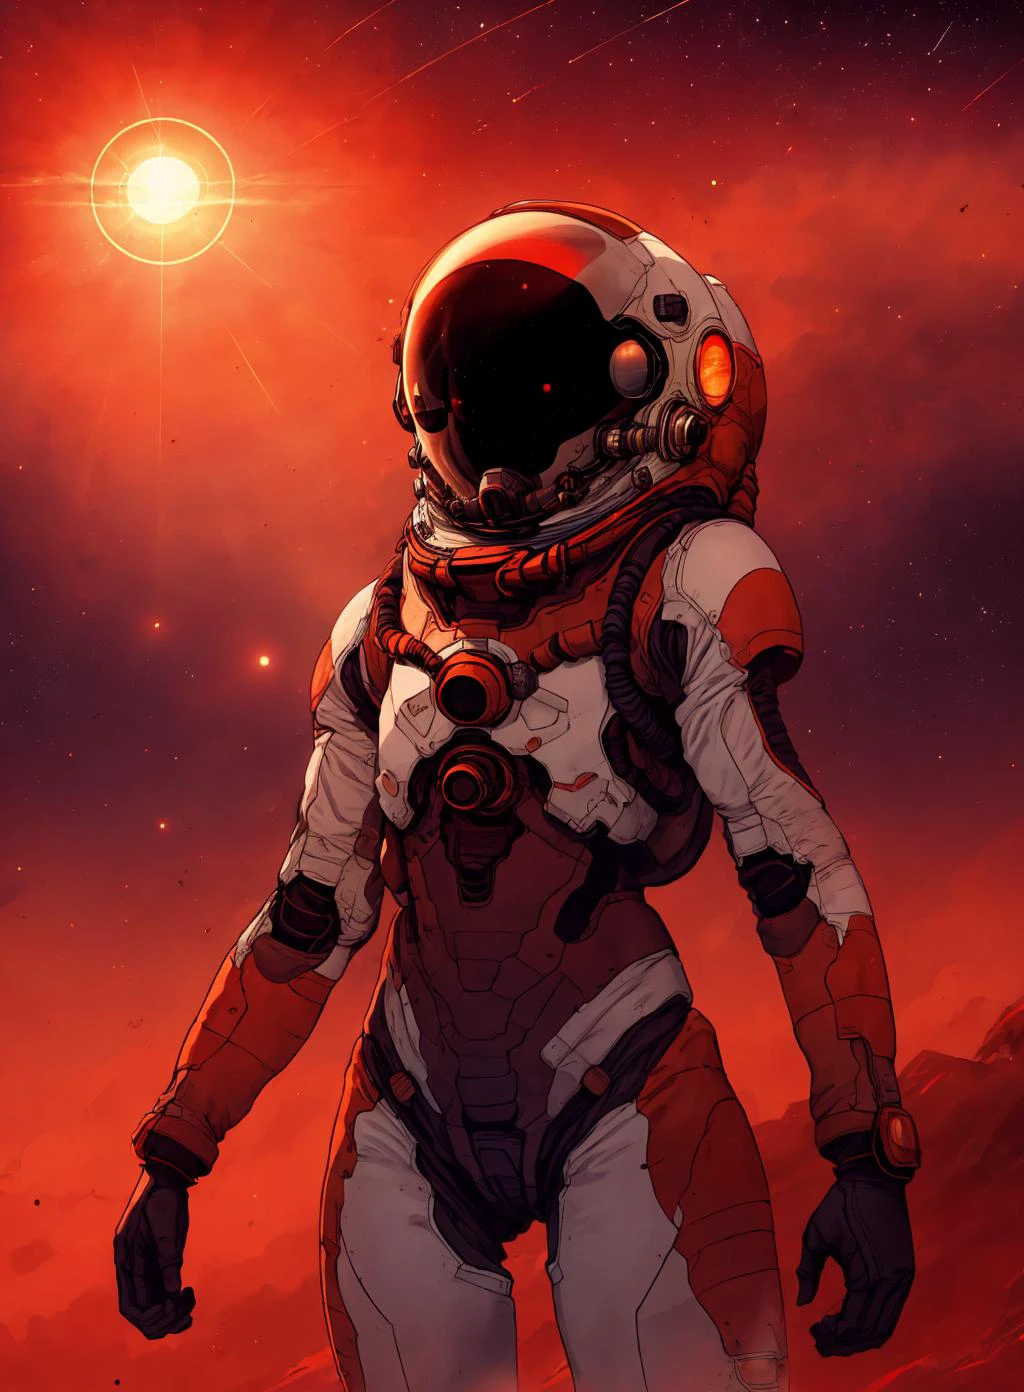 draw of a place,
mars, sun, red sky, astronaut far,
